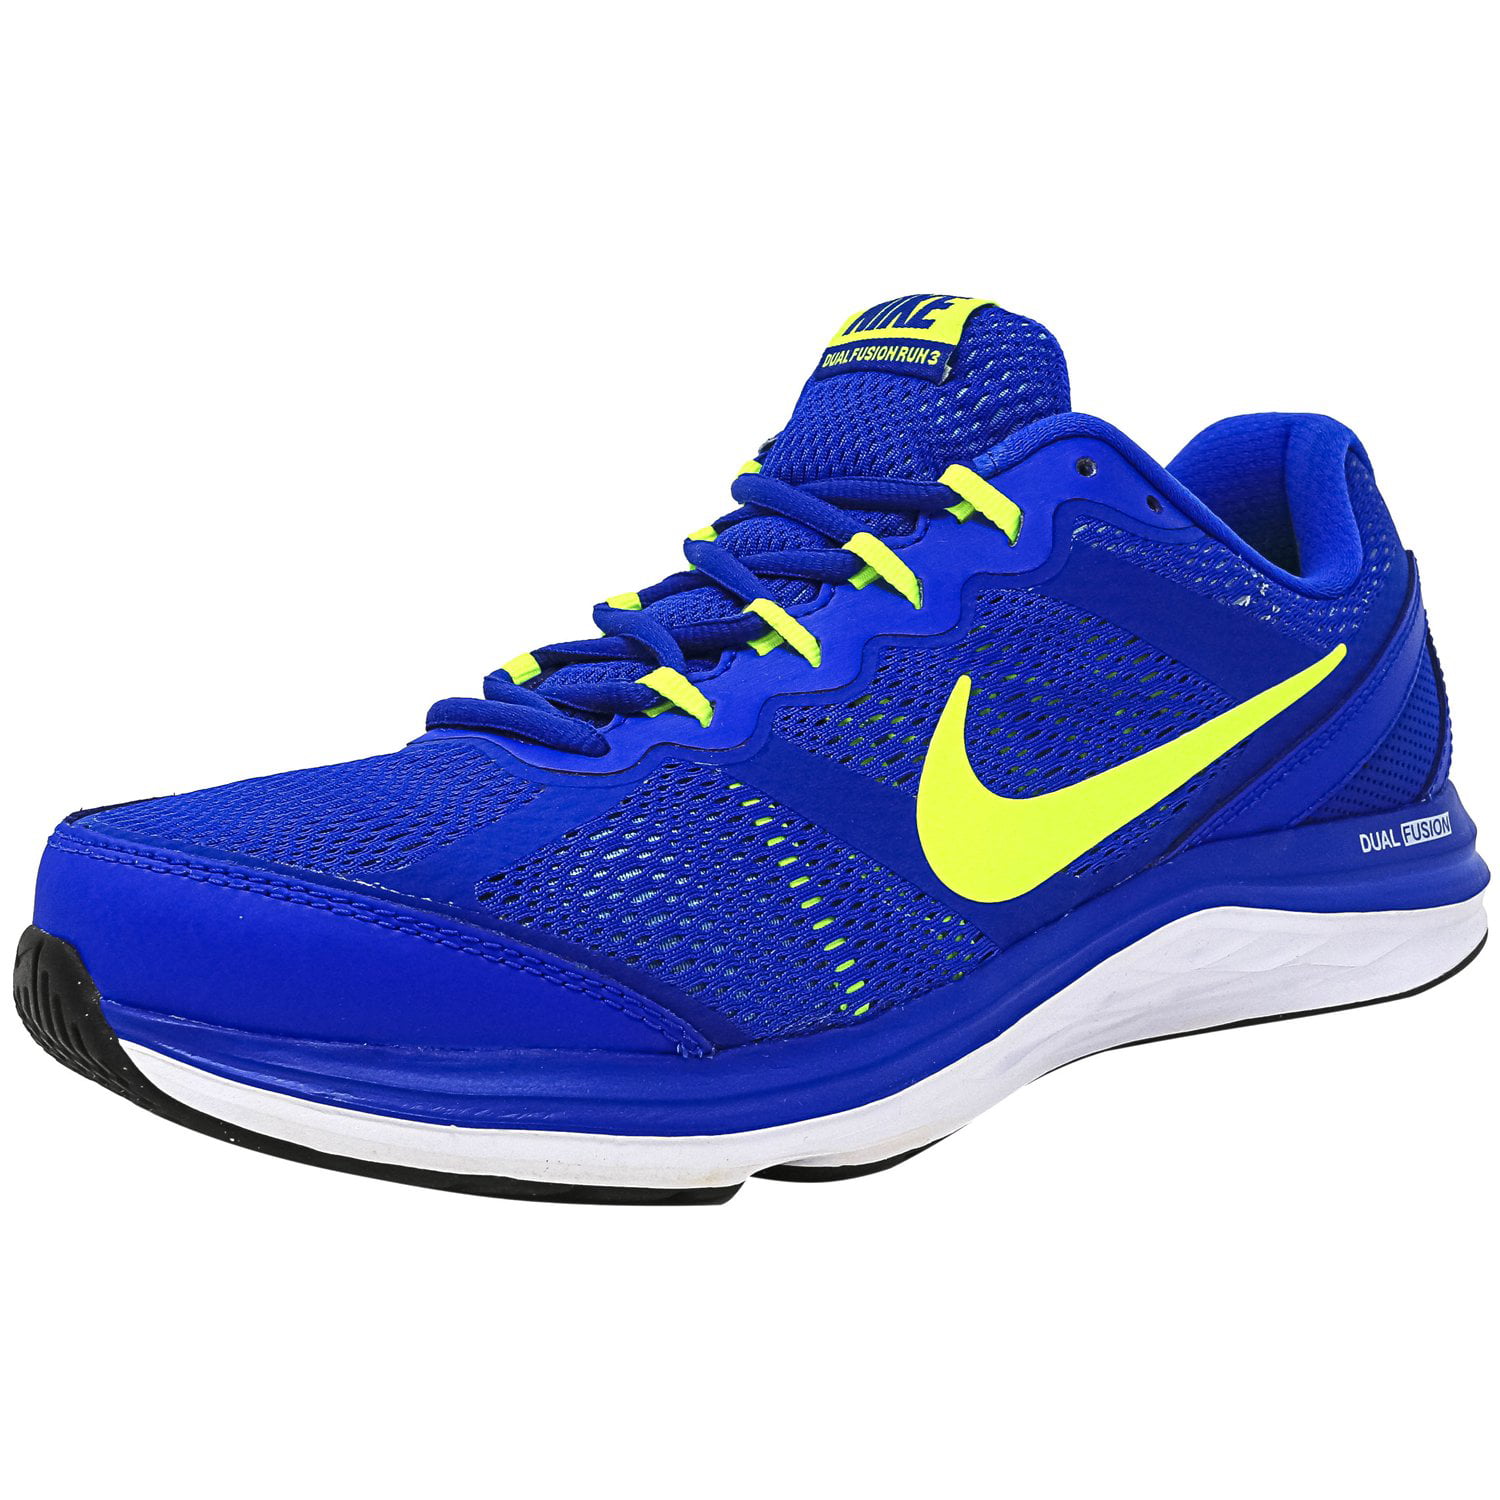 Nike Men's Dual Fusion Run Hyper Cobalt / Volt-University Ankle-High Mesh Running Shoe - 9.5M - Walmart.com